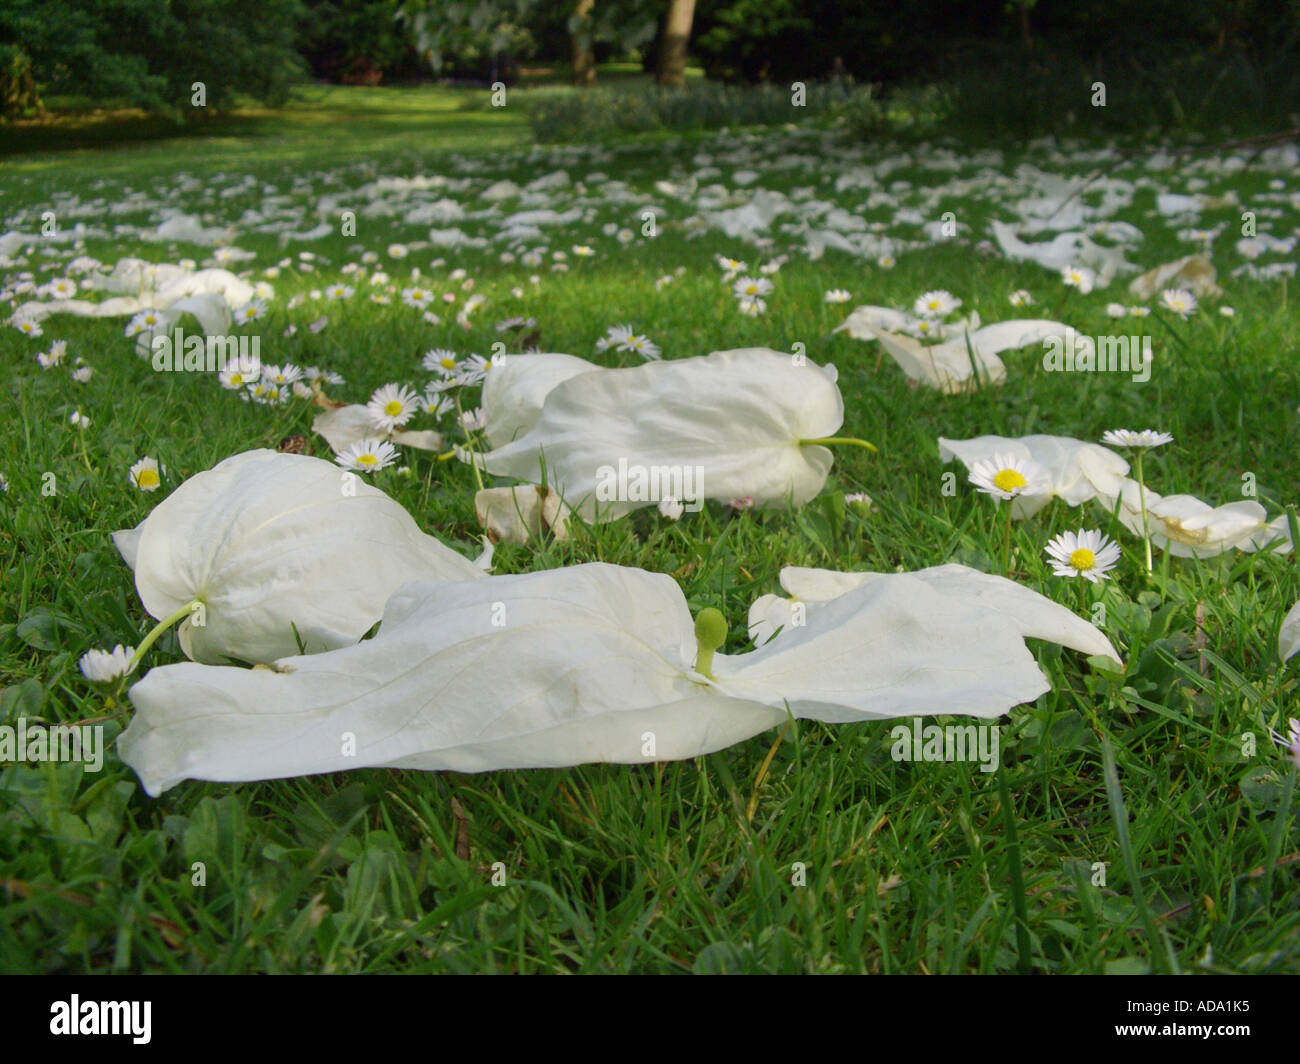 pocket-handkerchief tree (Davidia involucrata), fallen inflorescences in a park lawn Stock Photo